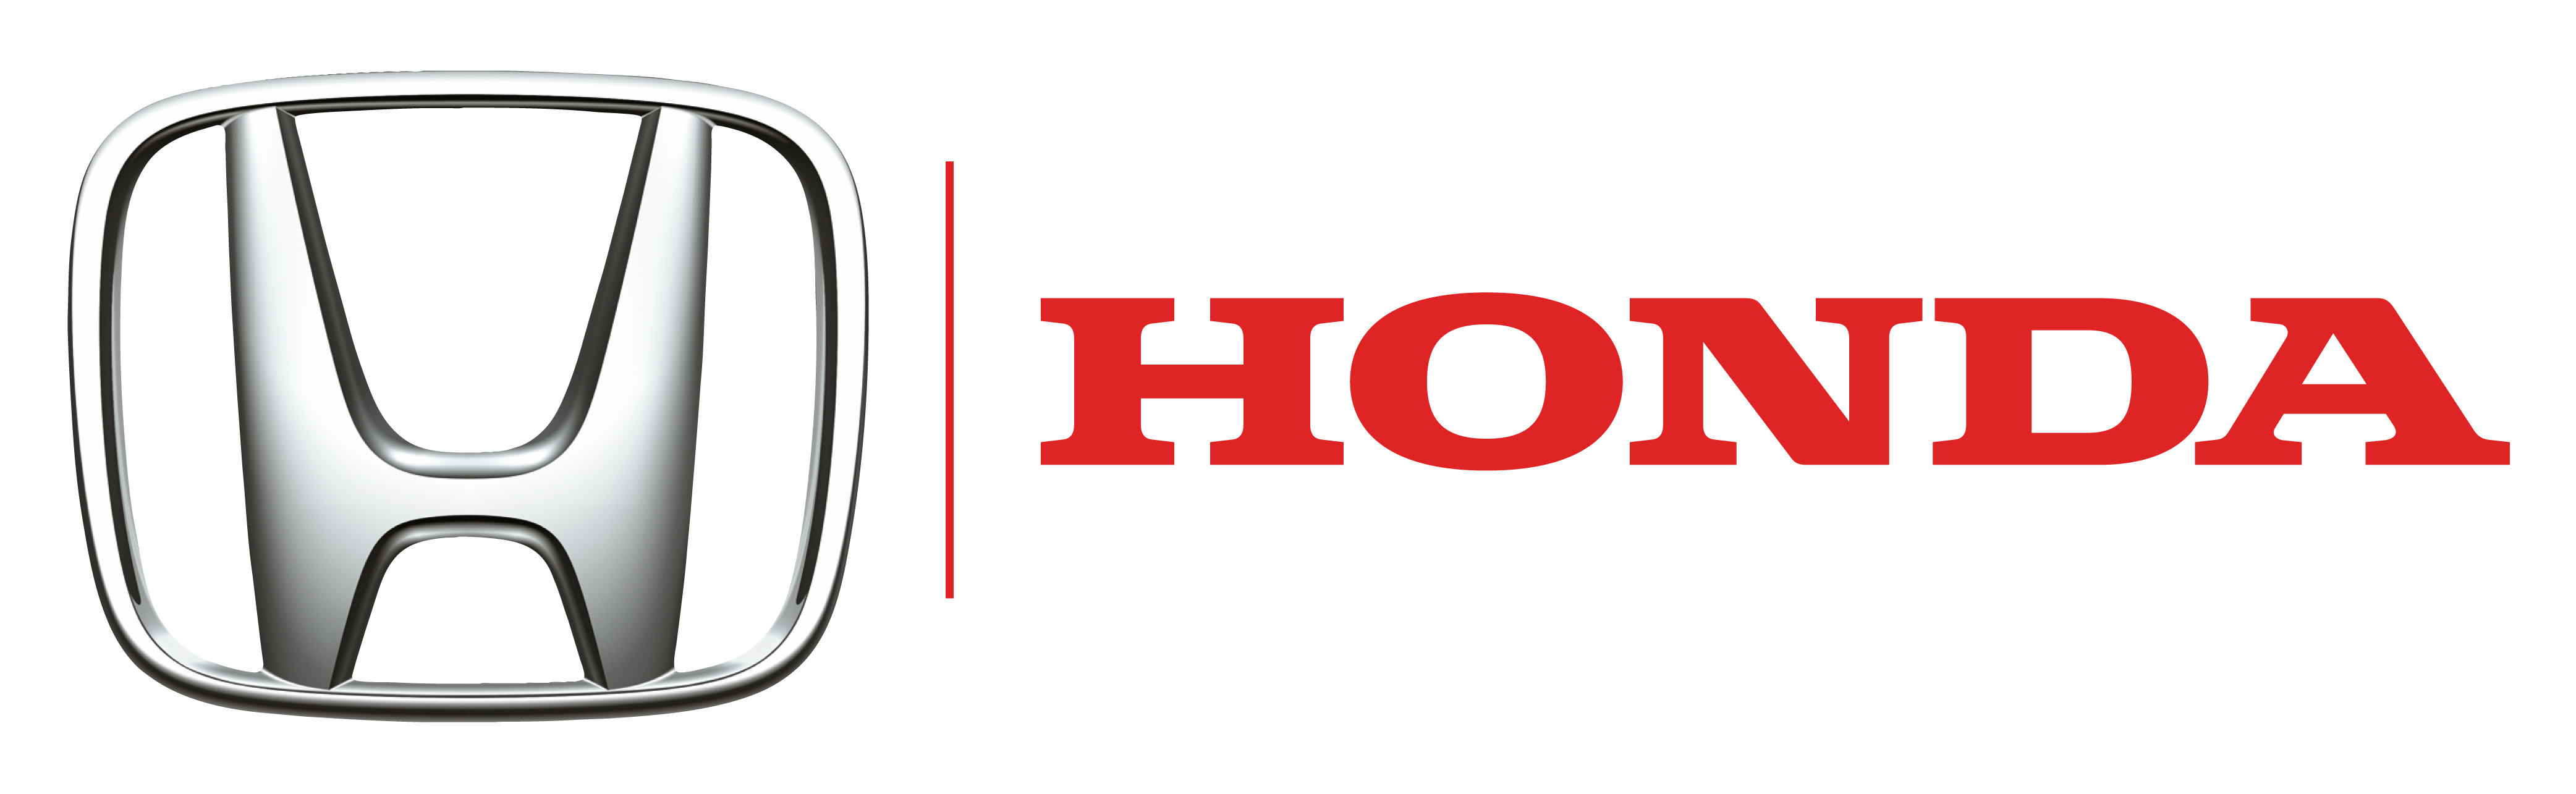 Honda название. Логотип Хонда. Хонда значок машины. Эмблема Honda logo. Хонда лого без фона.